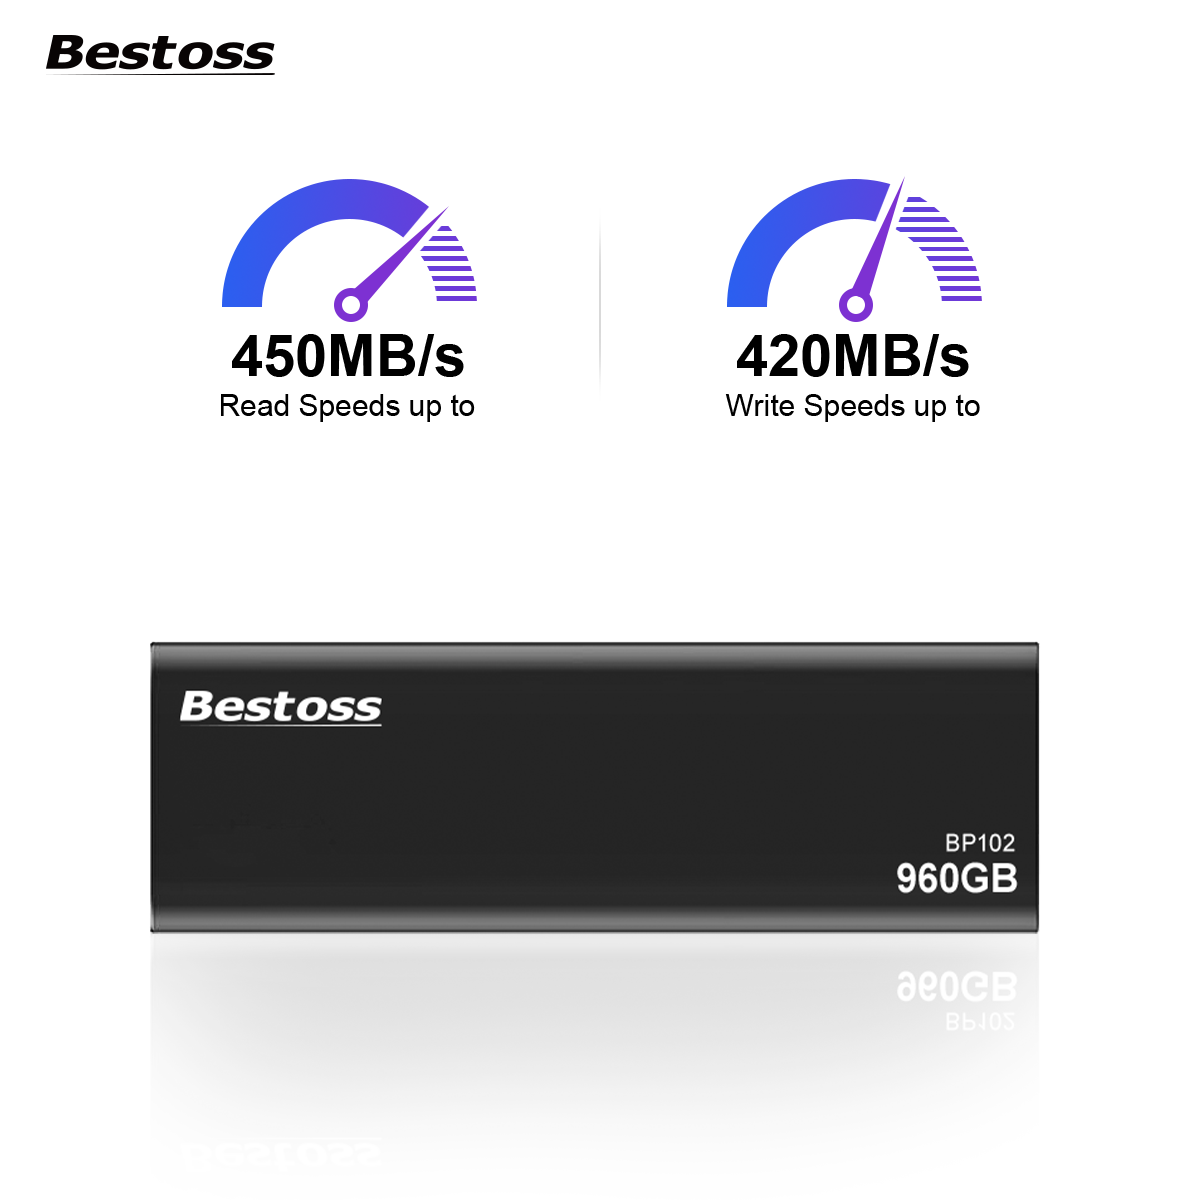 BP102 512GB USB 3.1 Gen2 Type C External SSD